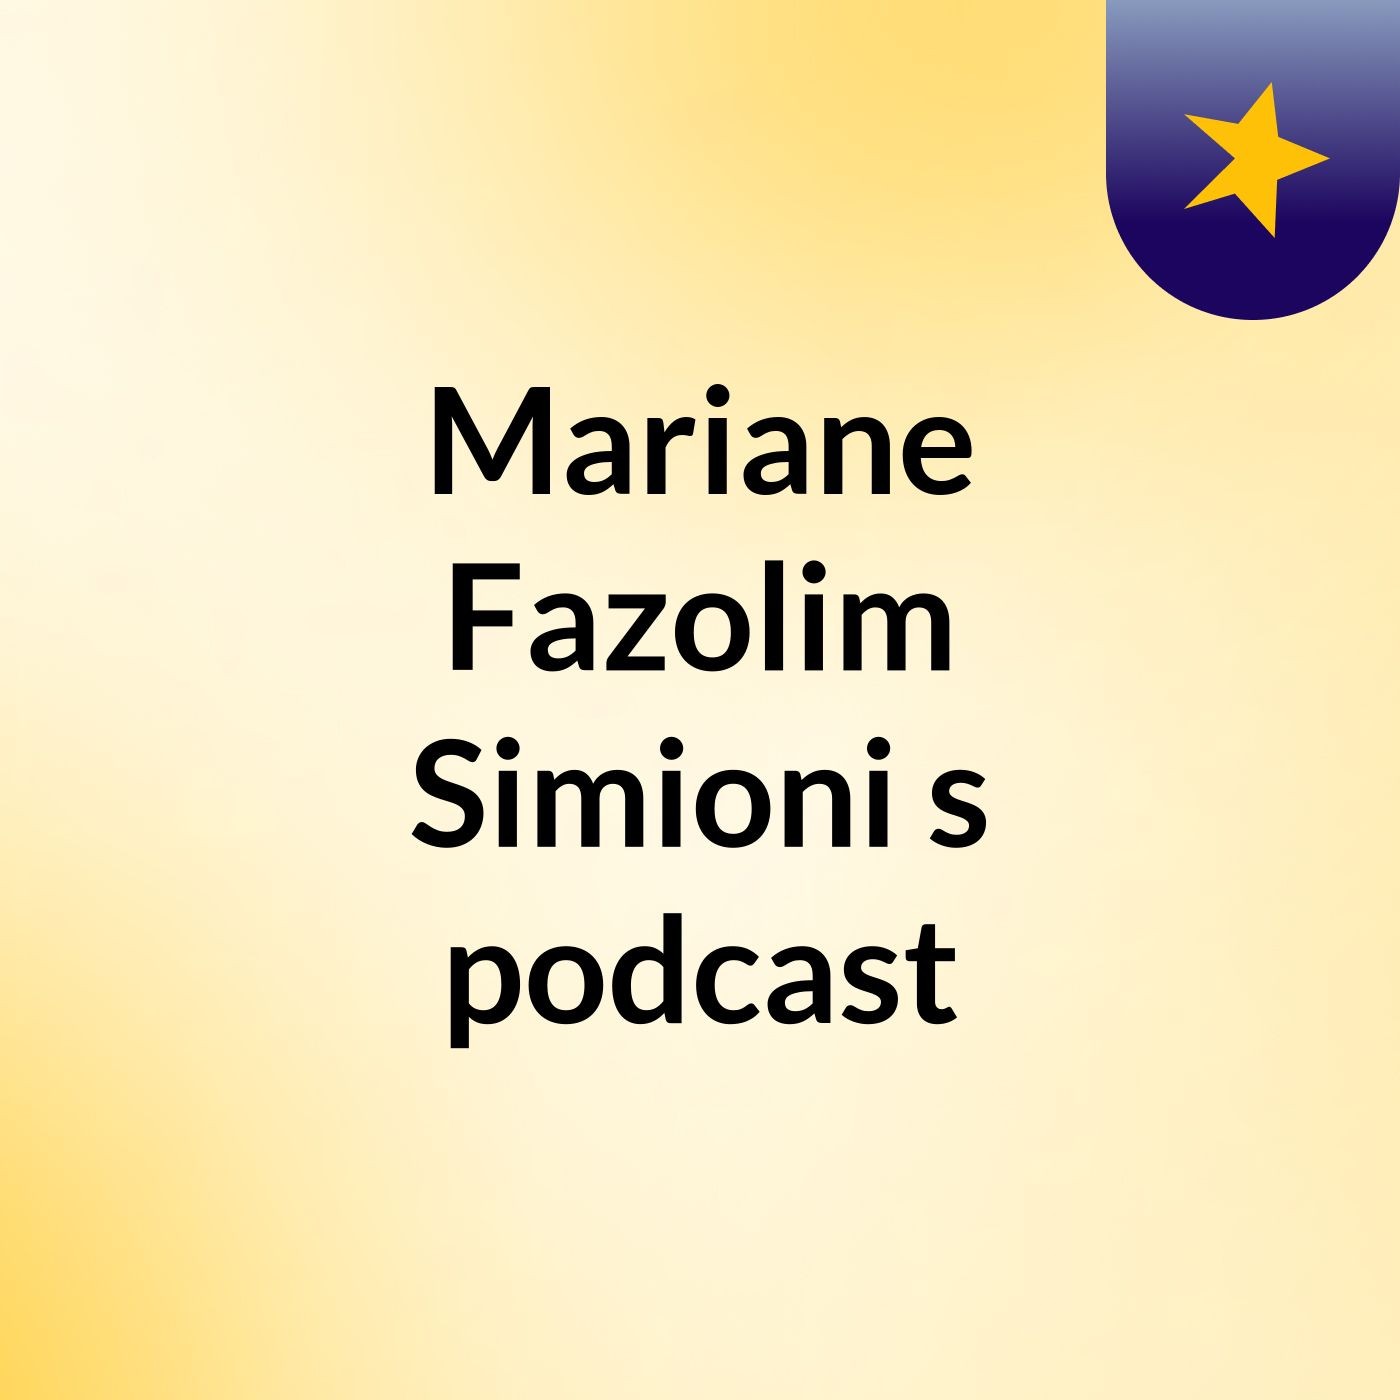 Mariane Fazolim Simioni's podcast